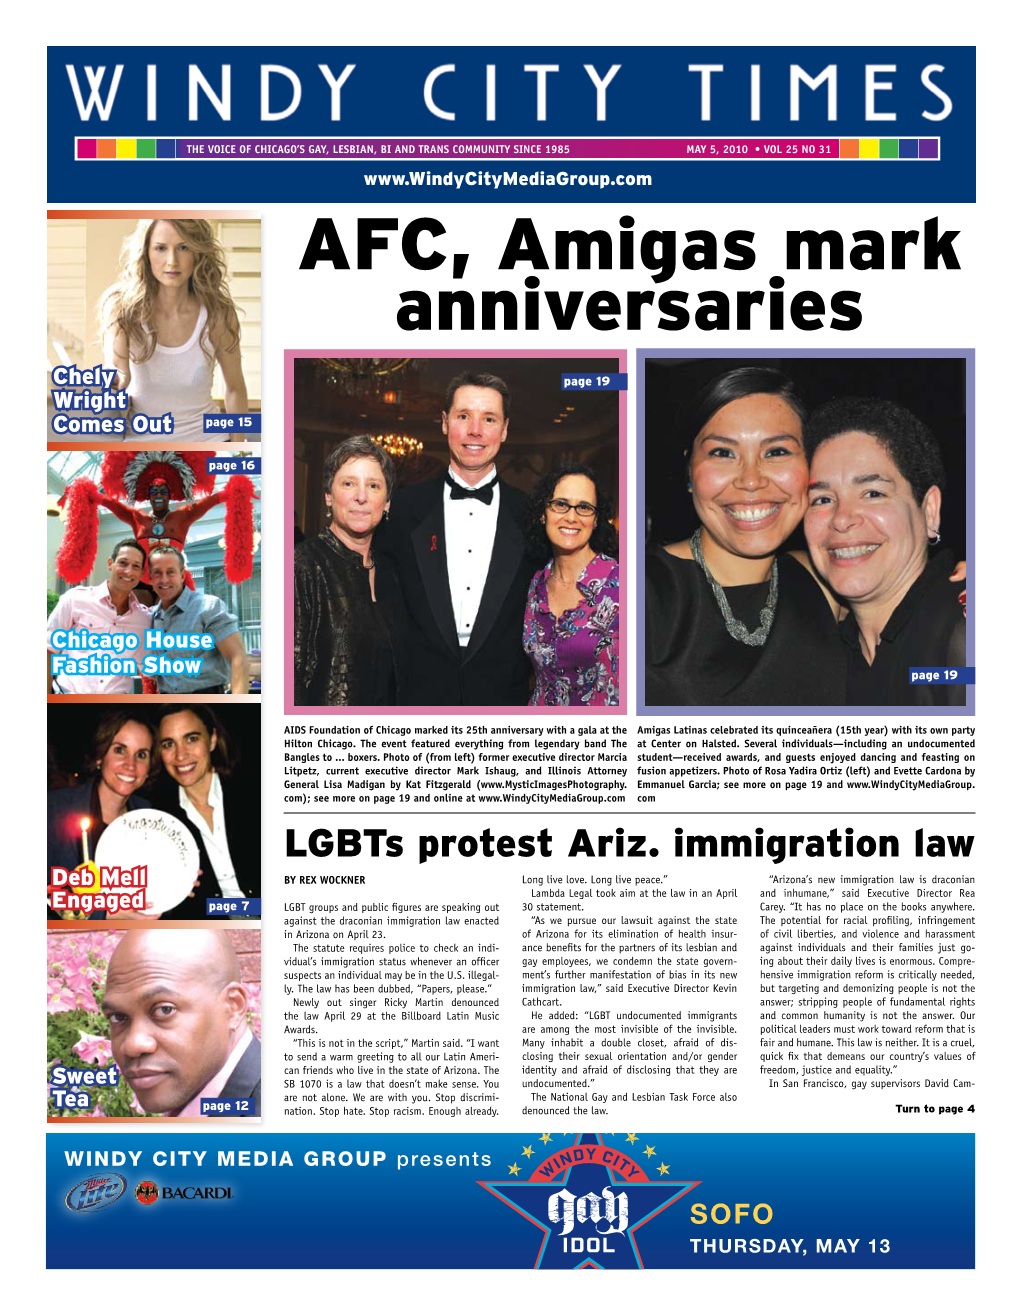 AFC, Amigas Mark Anniversaries